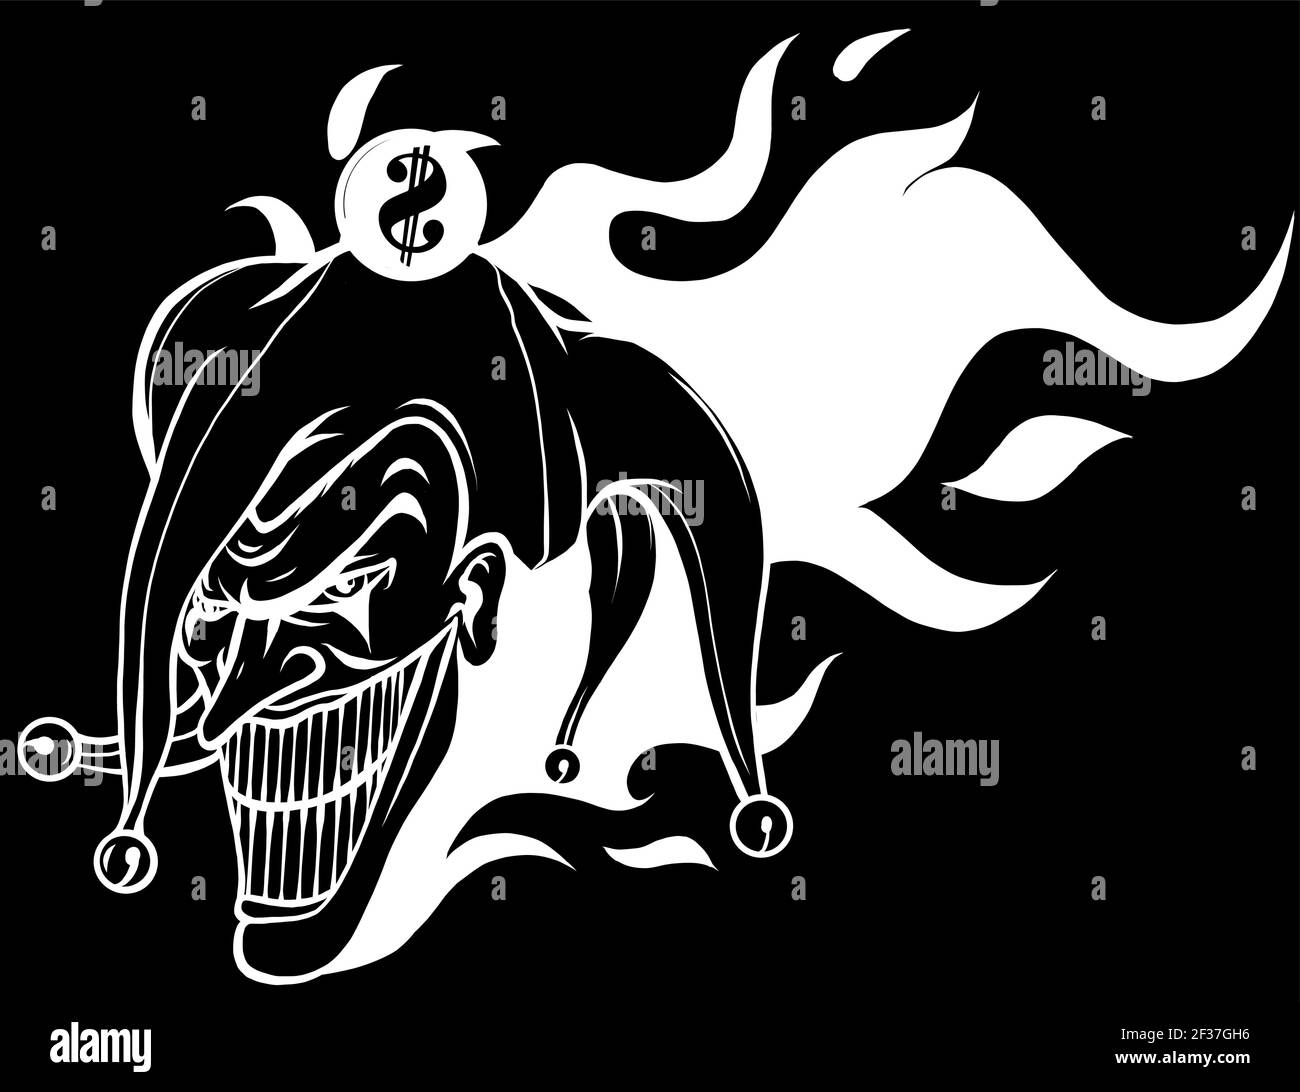 Lachend wütend Joker, Charakter, Joker Kopf, Silhouette in schwarzem Hintergrund Vektor-Illustration Stock Vektor